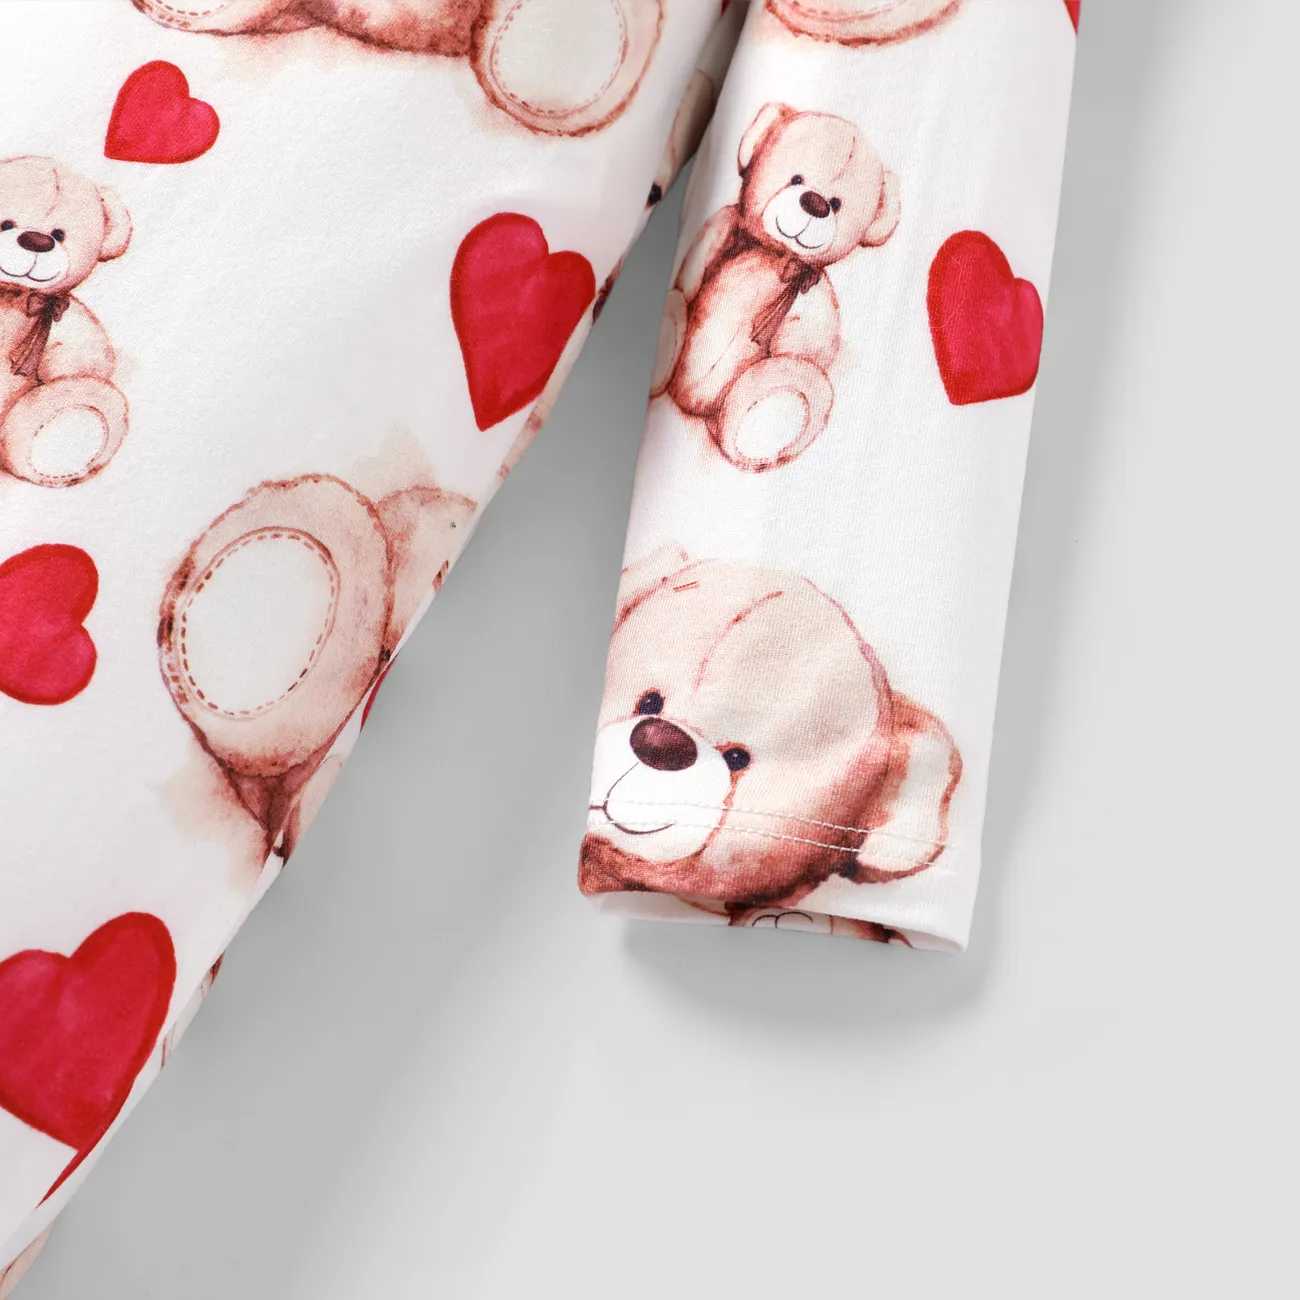 Baby Girl Valentine Sweet Bear and Polka Dot Print Jumpsuit Original White big image 1